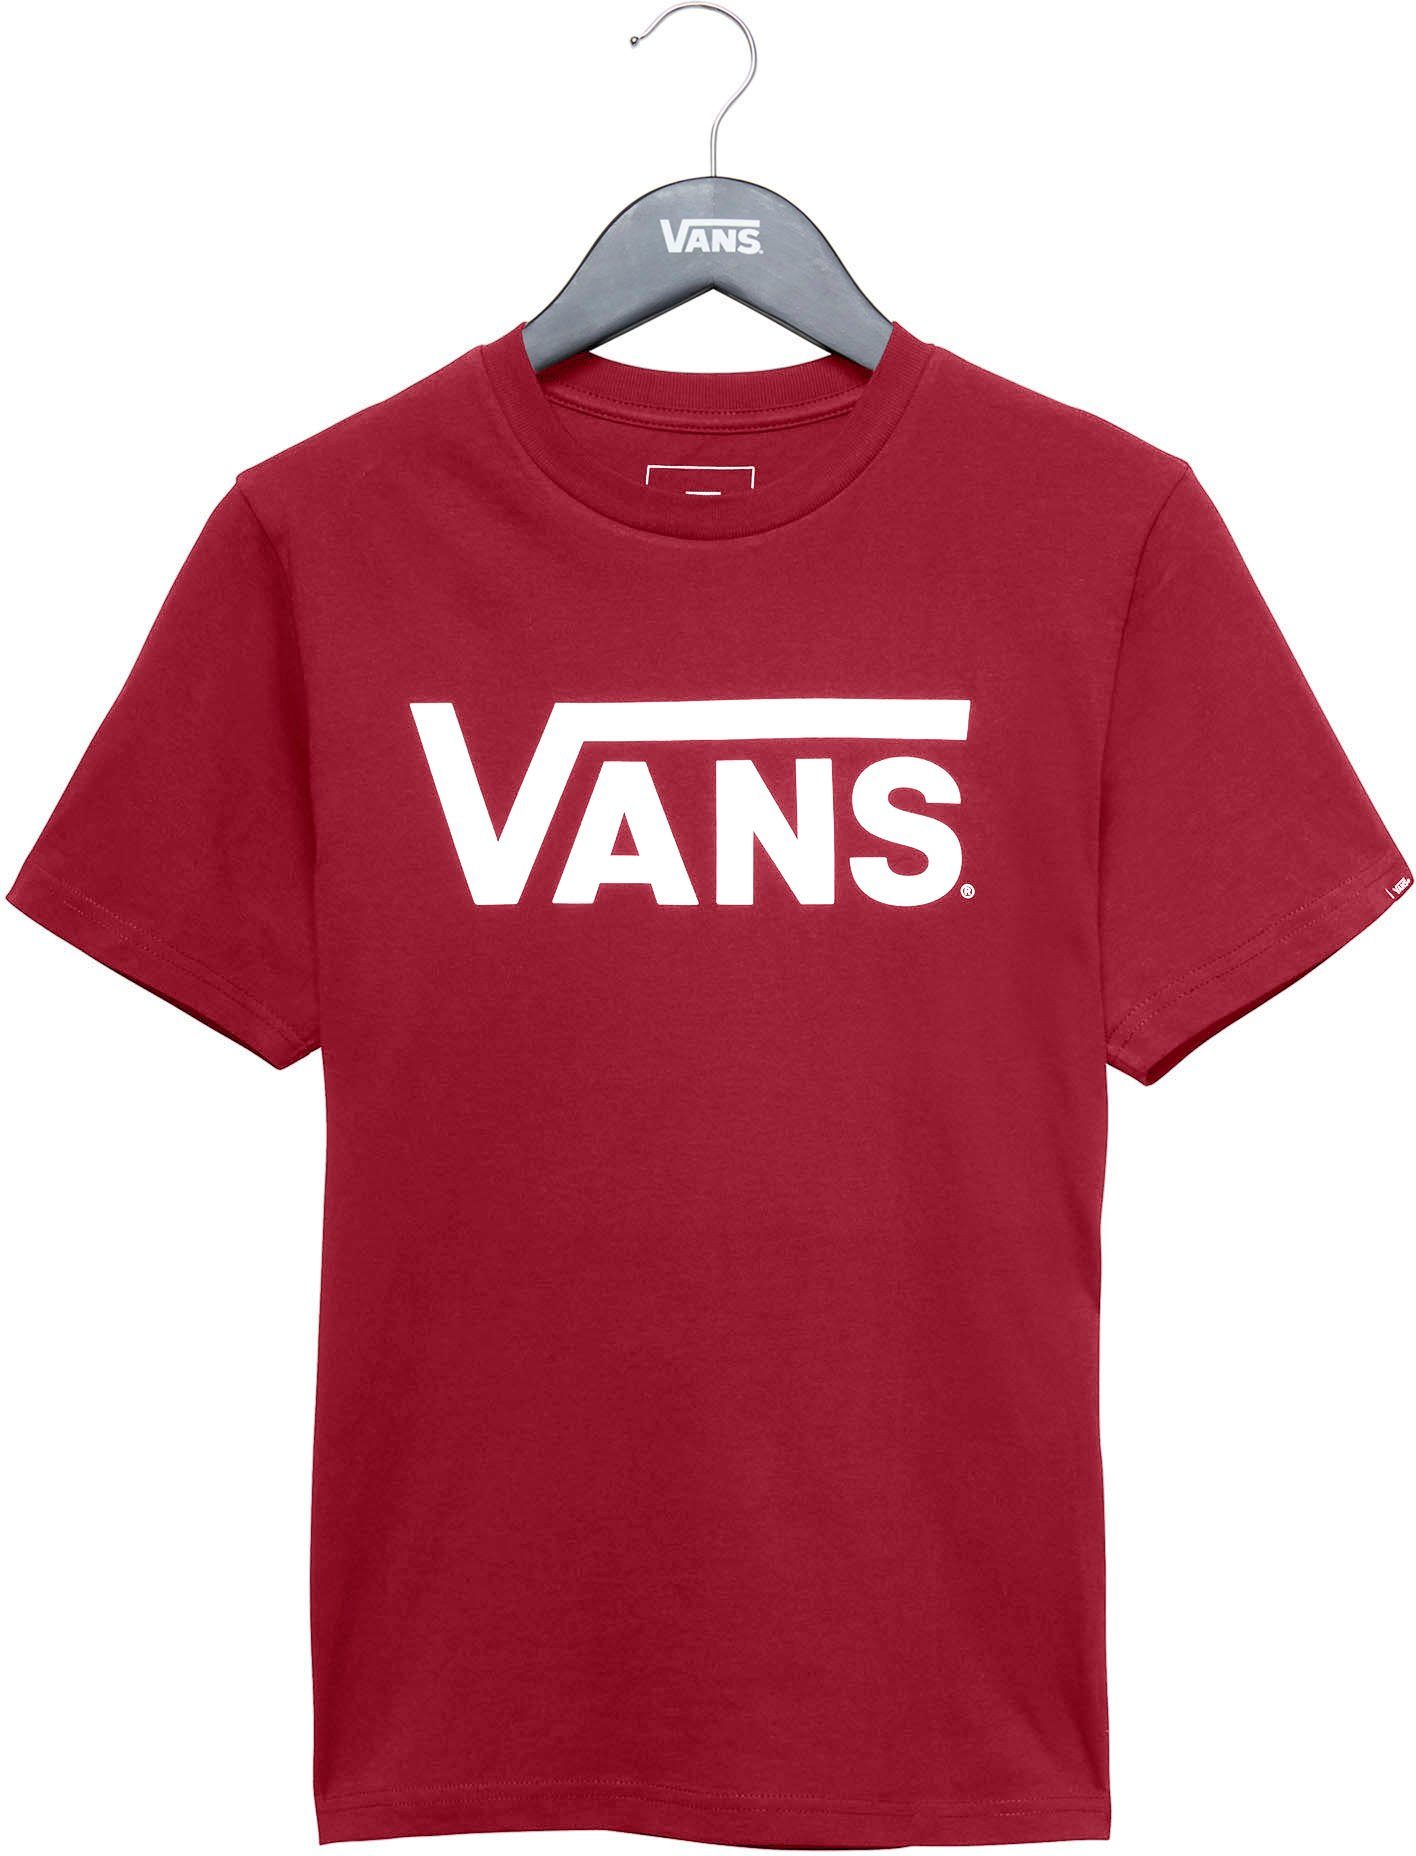 Vans chili BOYS pepper T-Shirt VANS CLASSIC